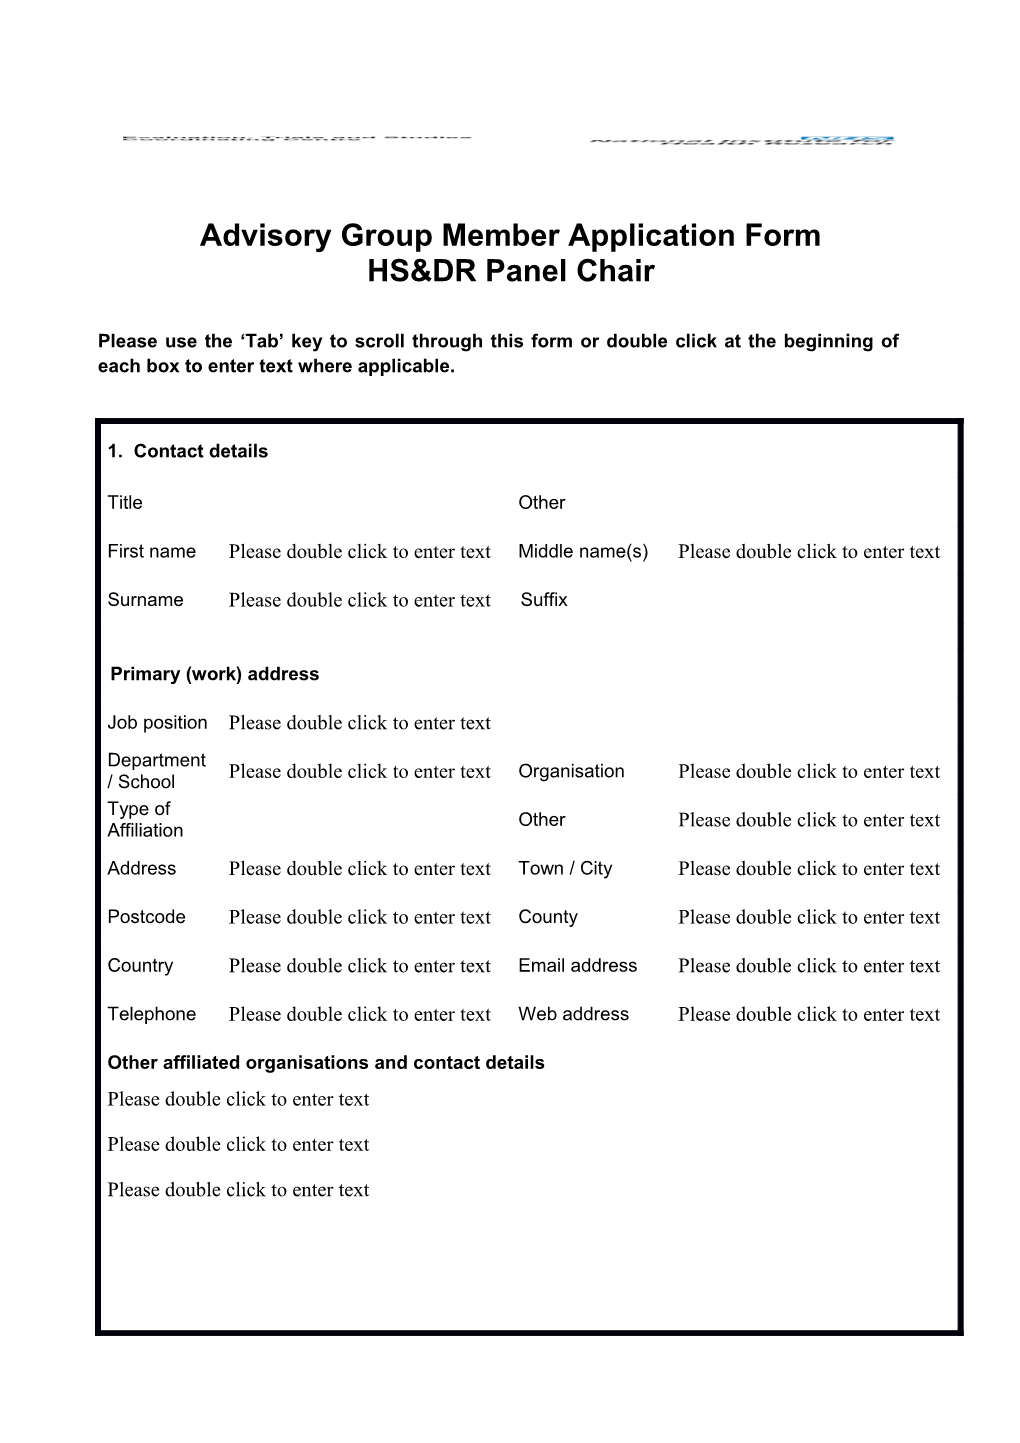 Advisory Group Member Application Form